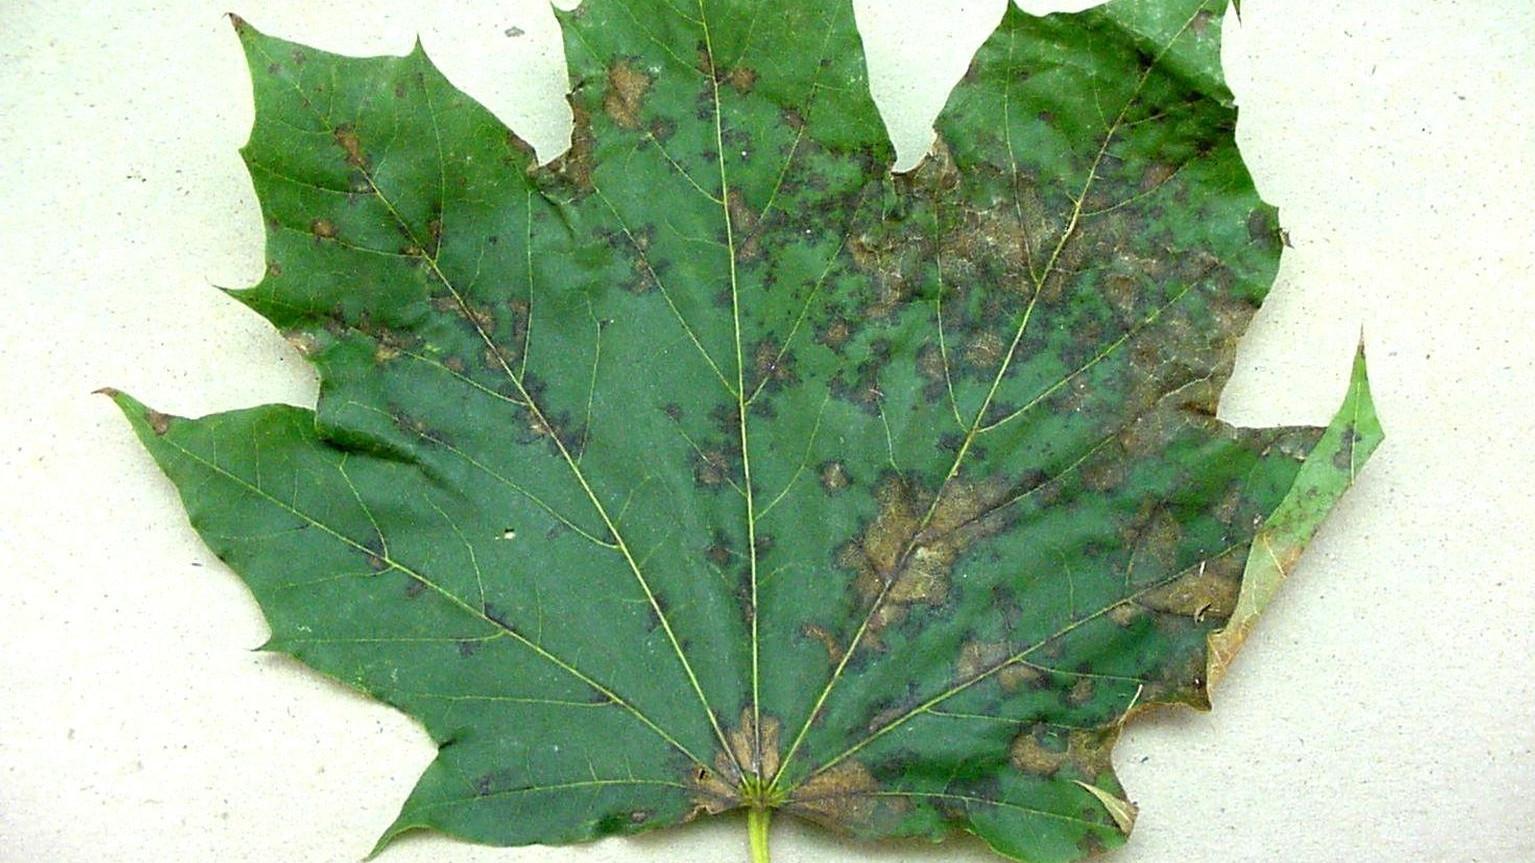 anthracnose symptoms - leaf spots on maple